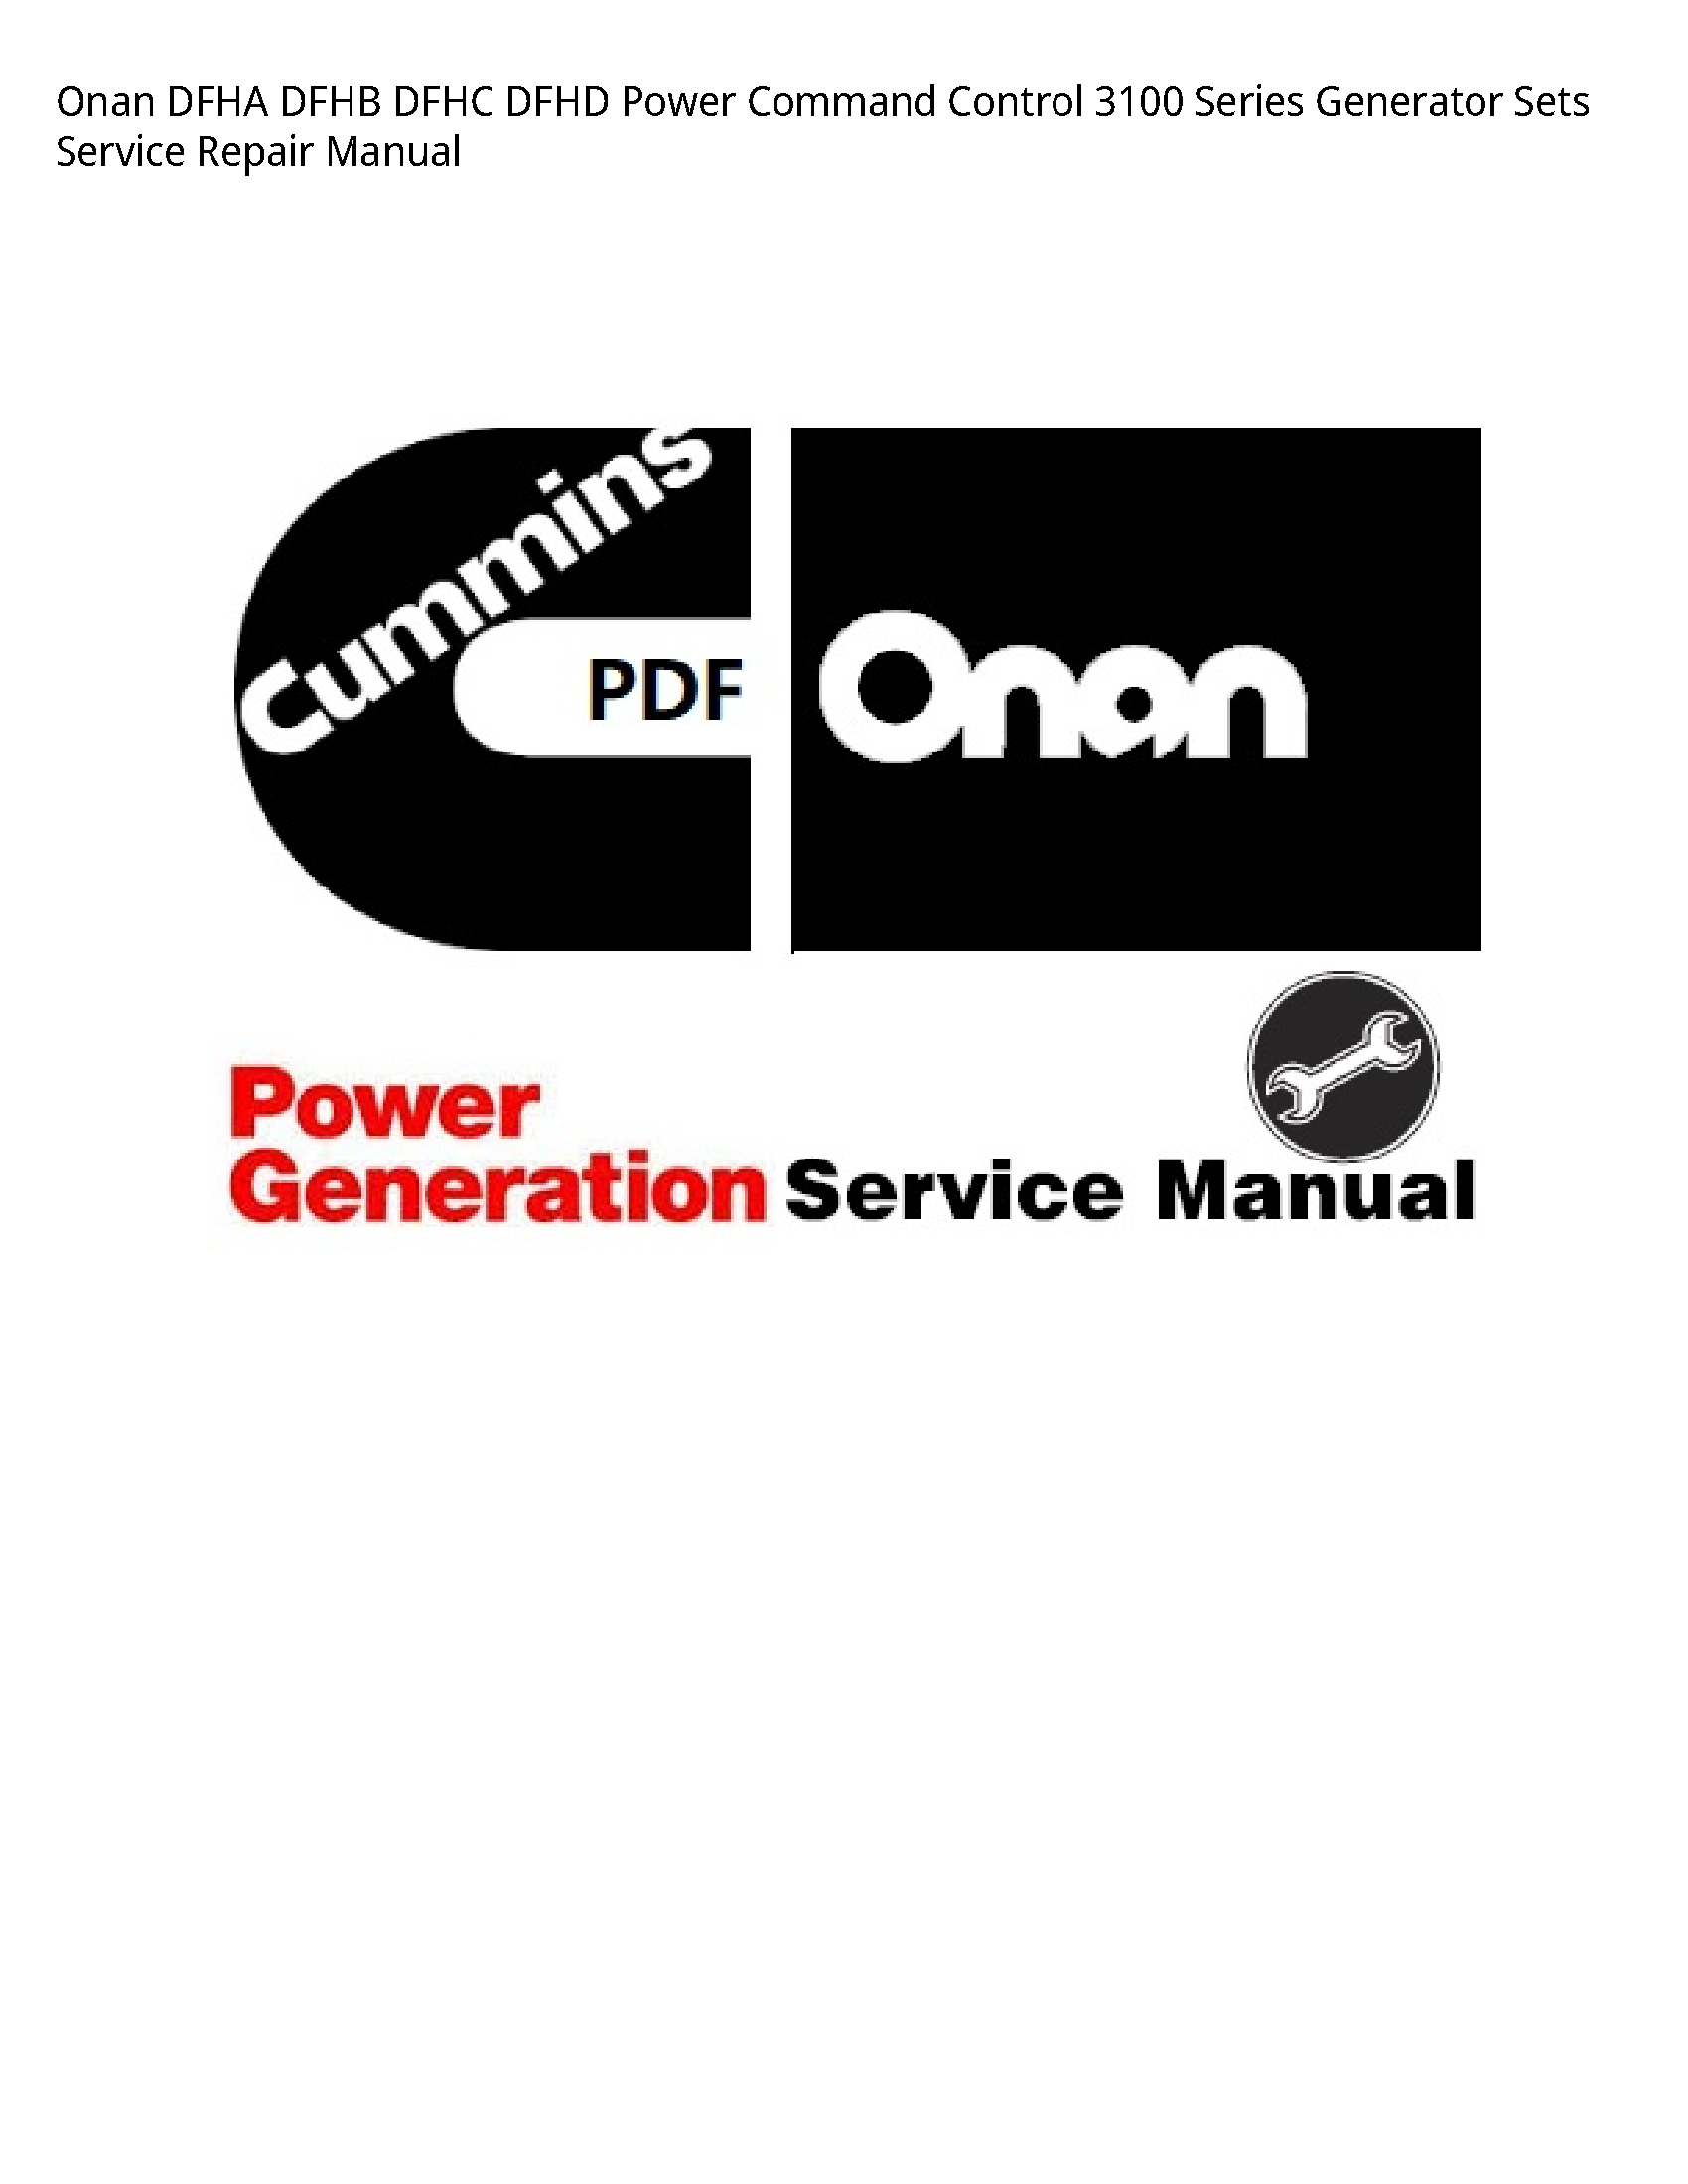 Onan 3100 DFHA DFHB DFHC DFHD Power Command Control Series Generator Sets manual